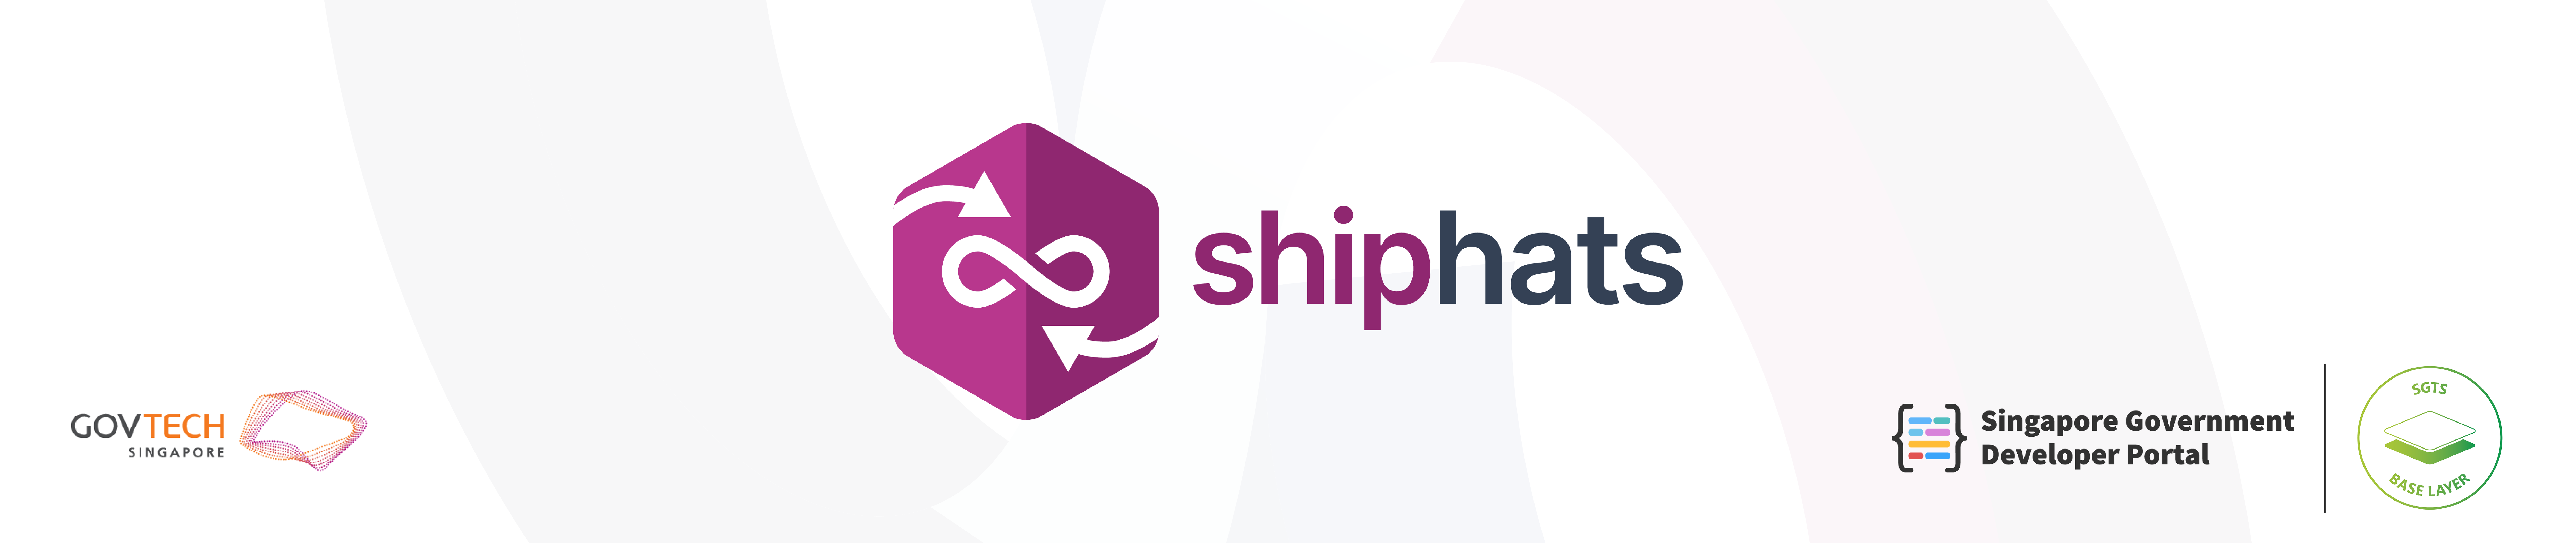 SHIPHATs header banner for Singapore Government Developer Portal